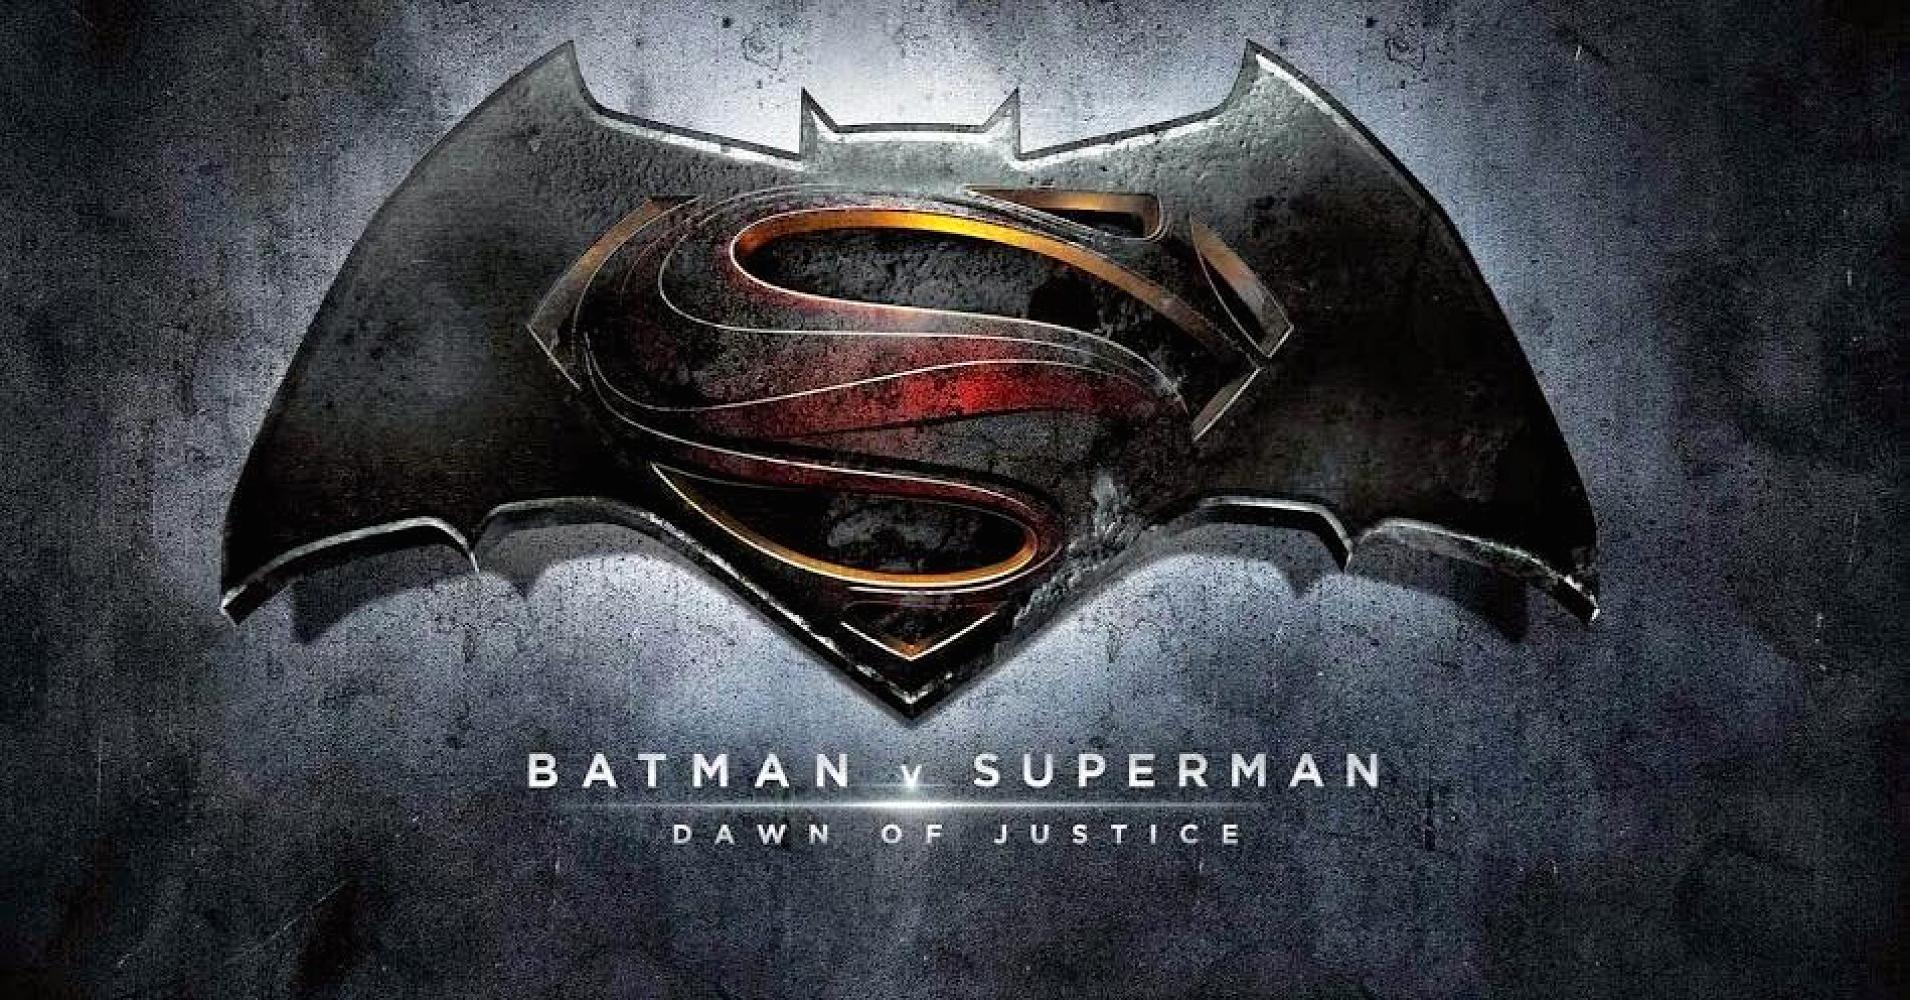 Batman V Superman Galaxy S7 Edge